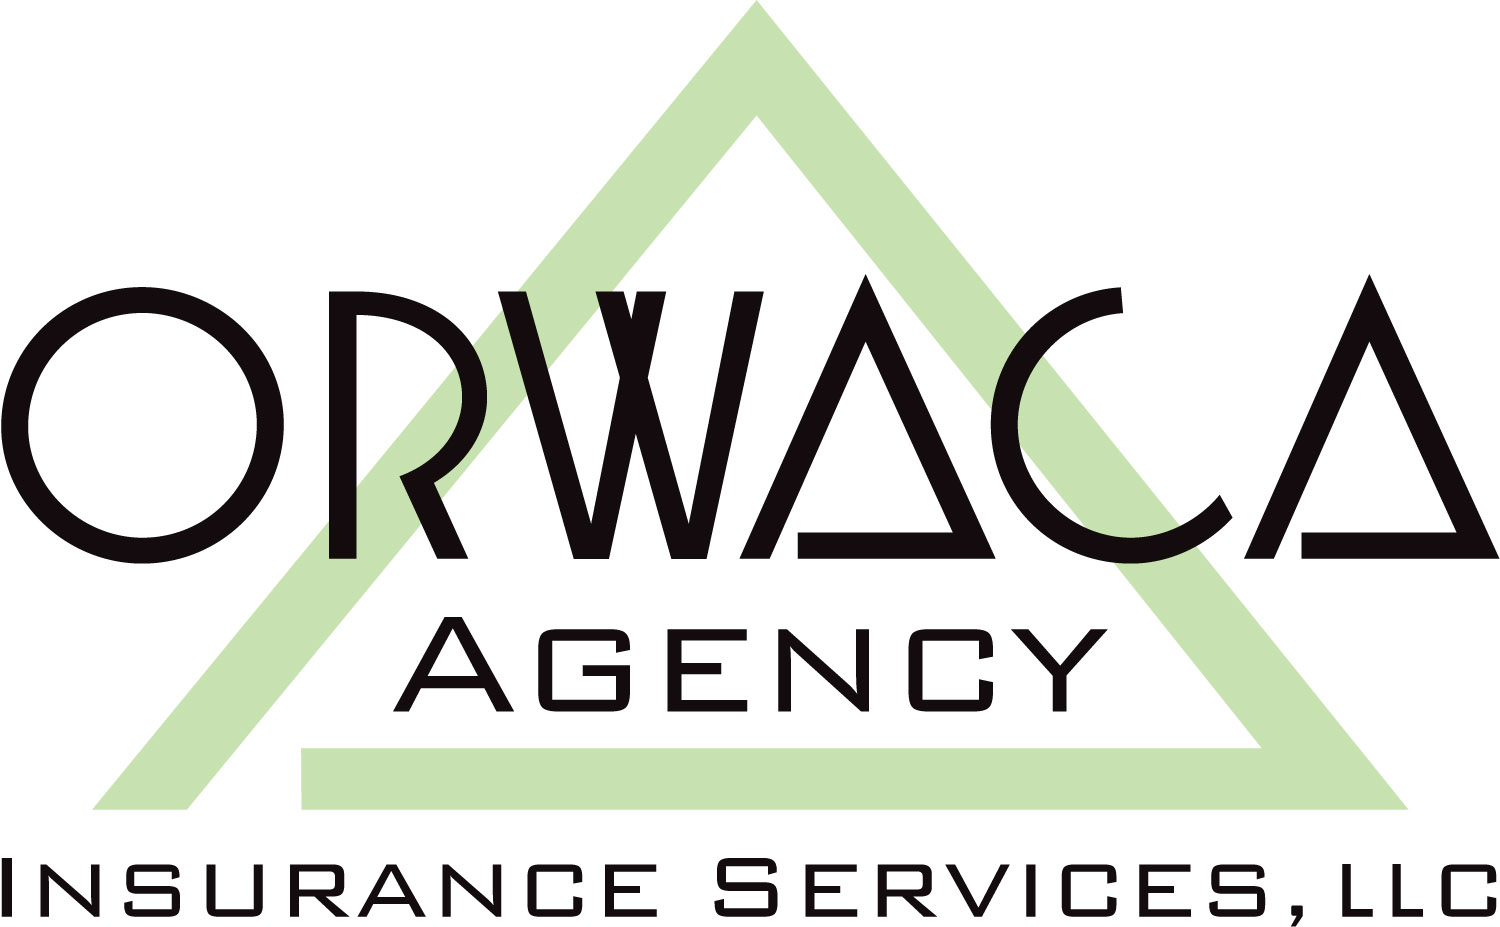 ORWACA Agency Insurance Services, LLC